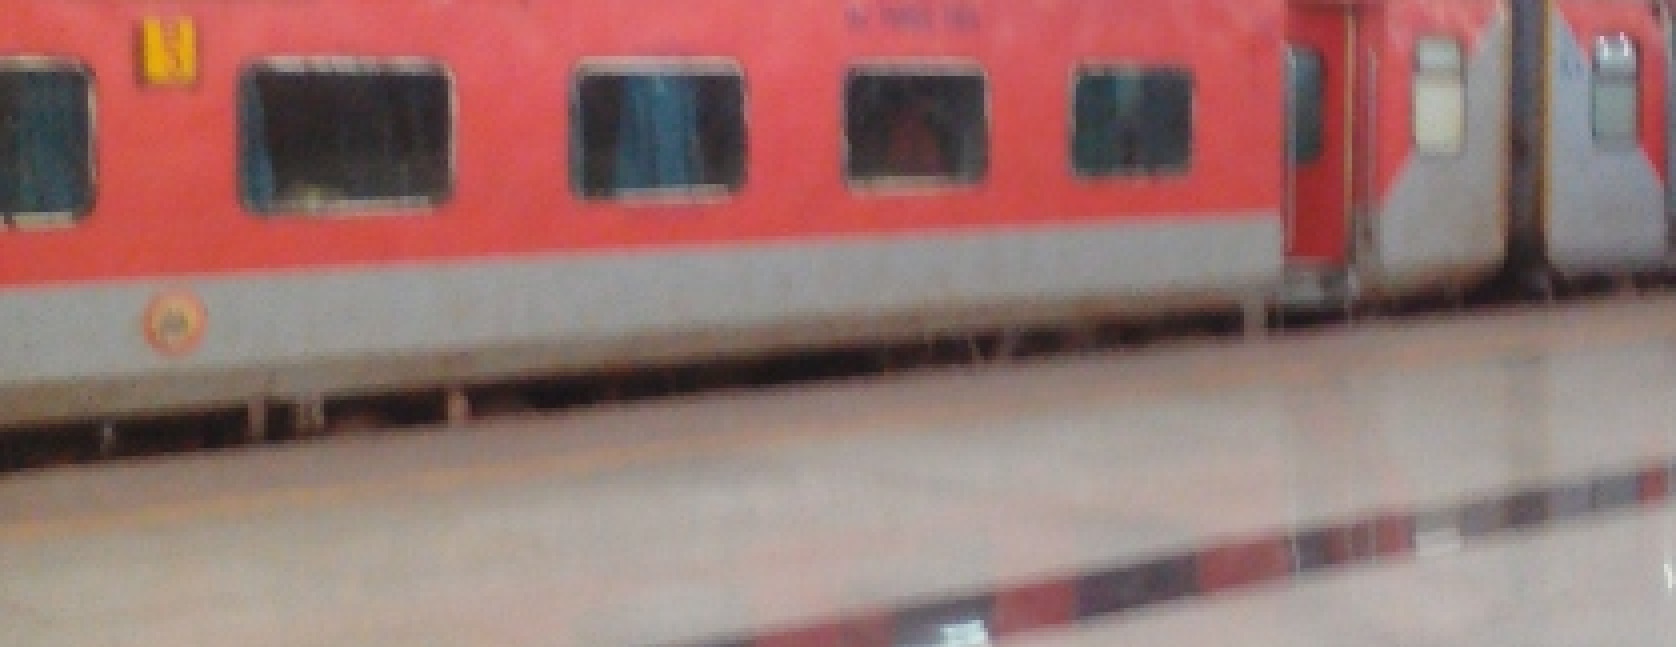 Train transport in Switzerland